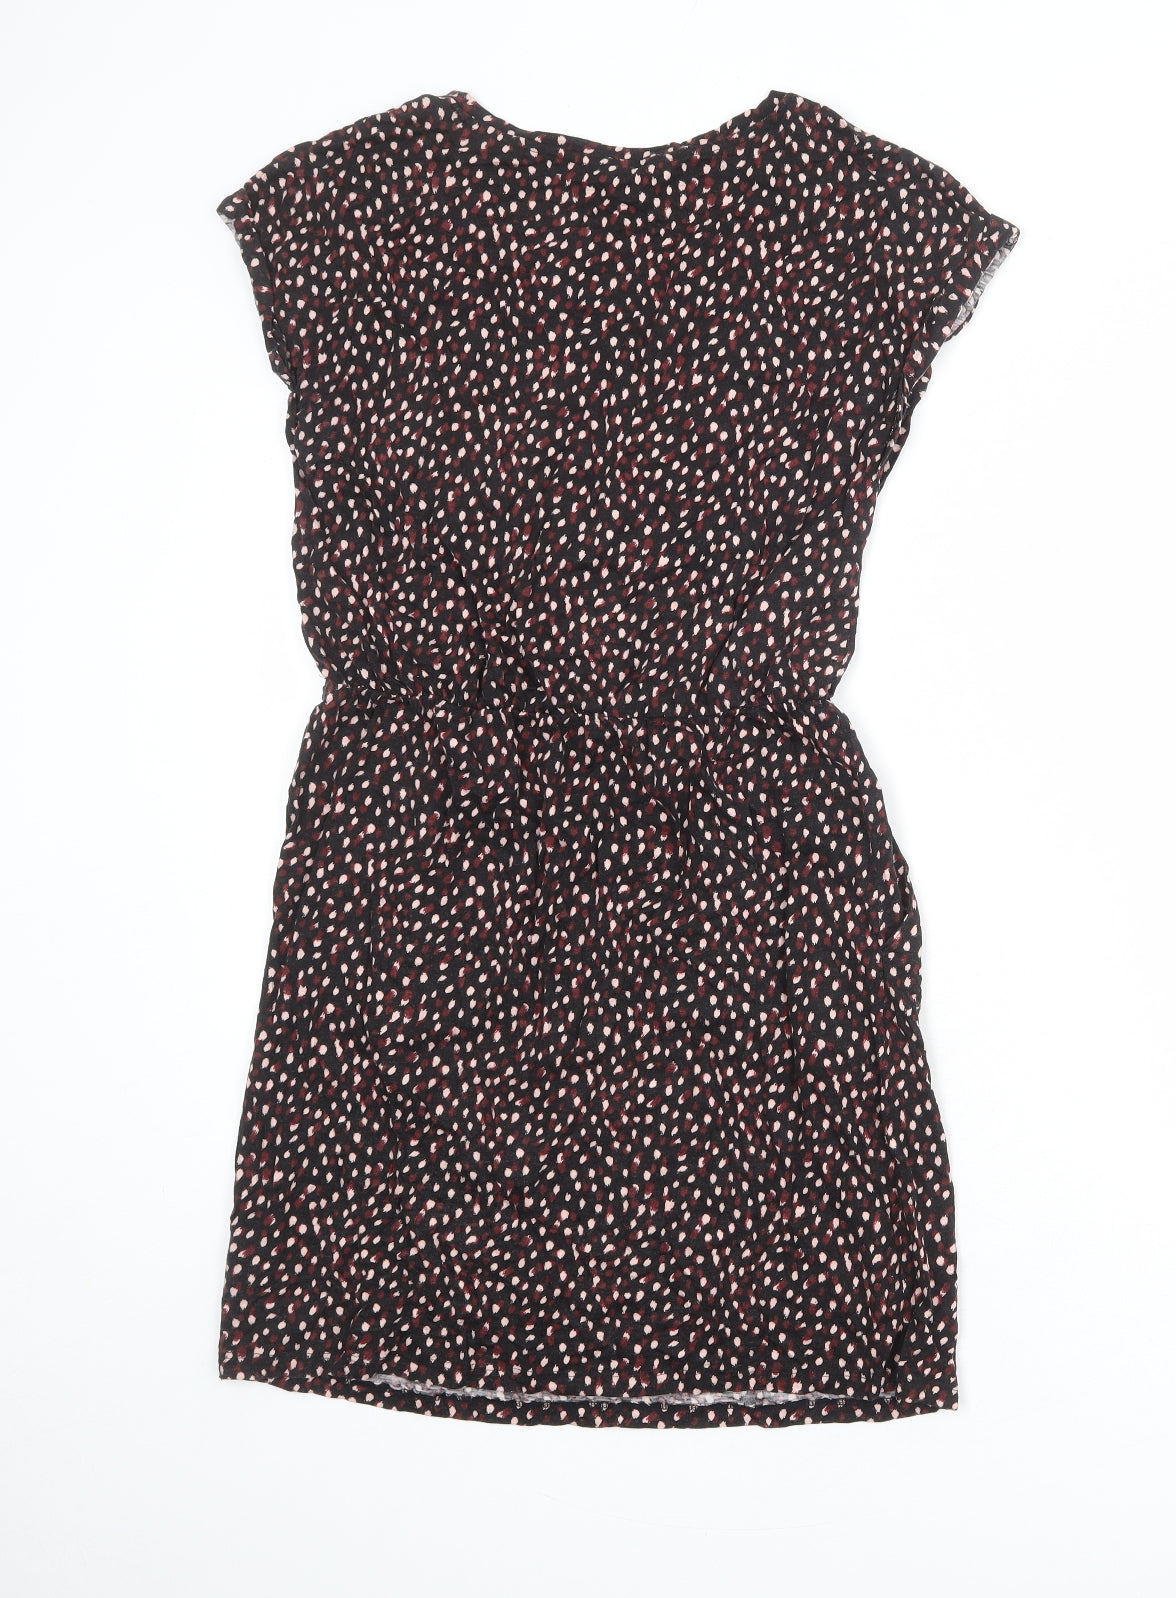 H&M Womens Black Geometric Cotton A-Line Size S Round Neck Pullover